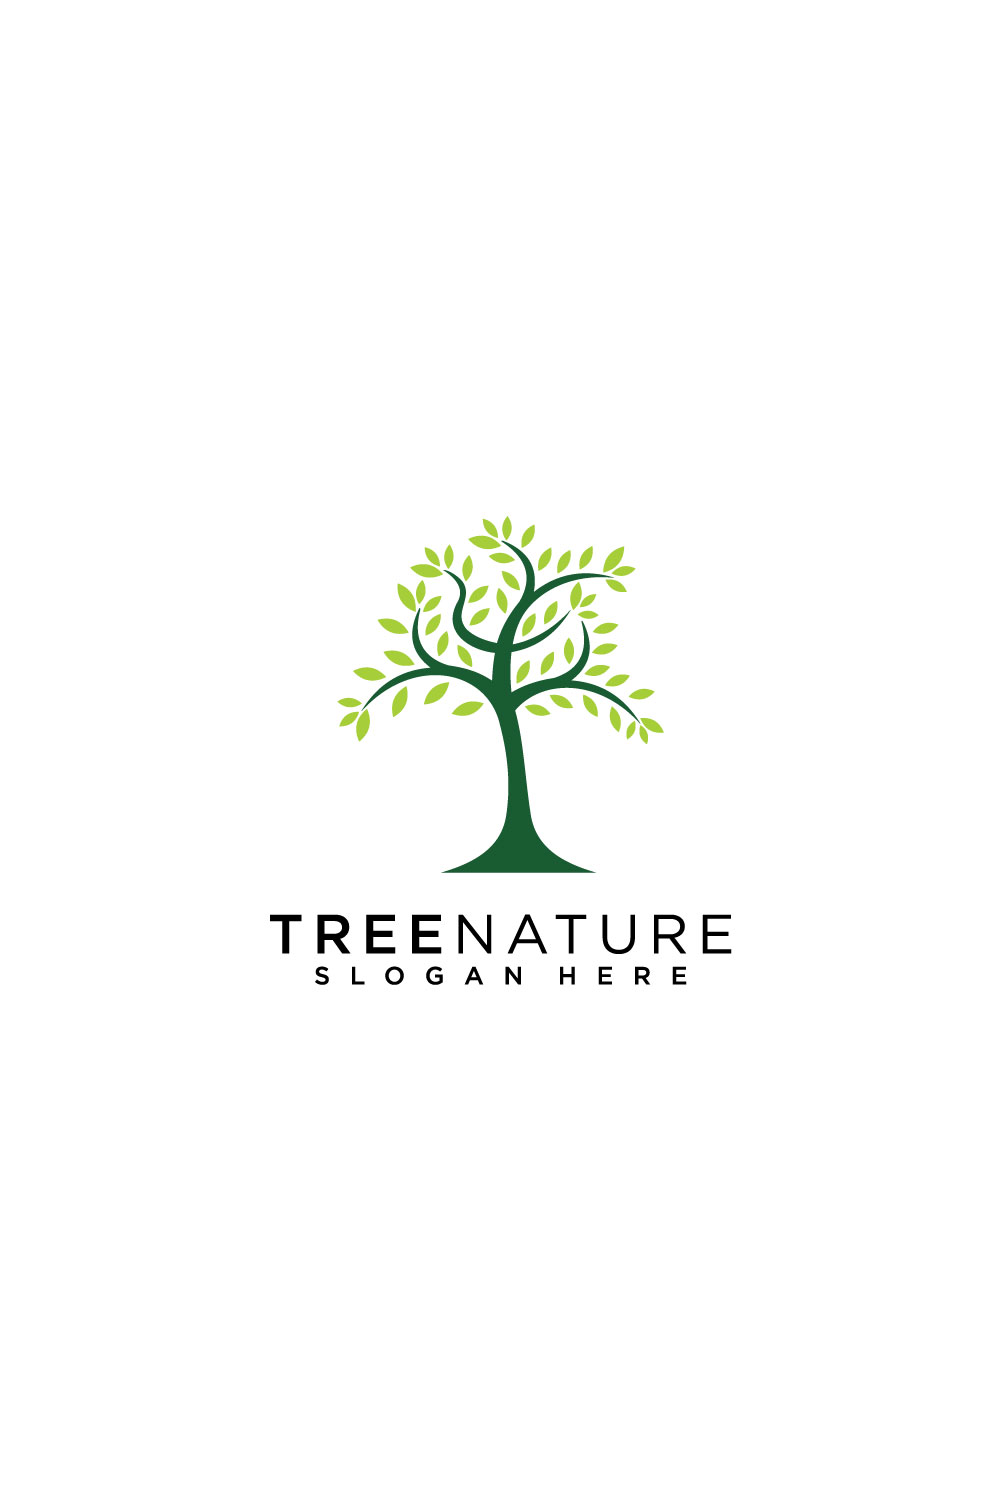 tree nature logo vector design pinterest preview image.